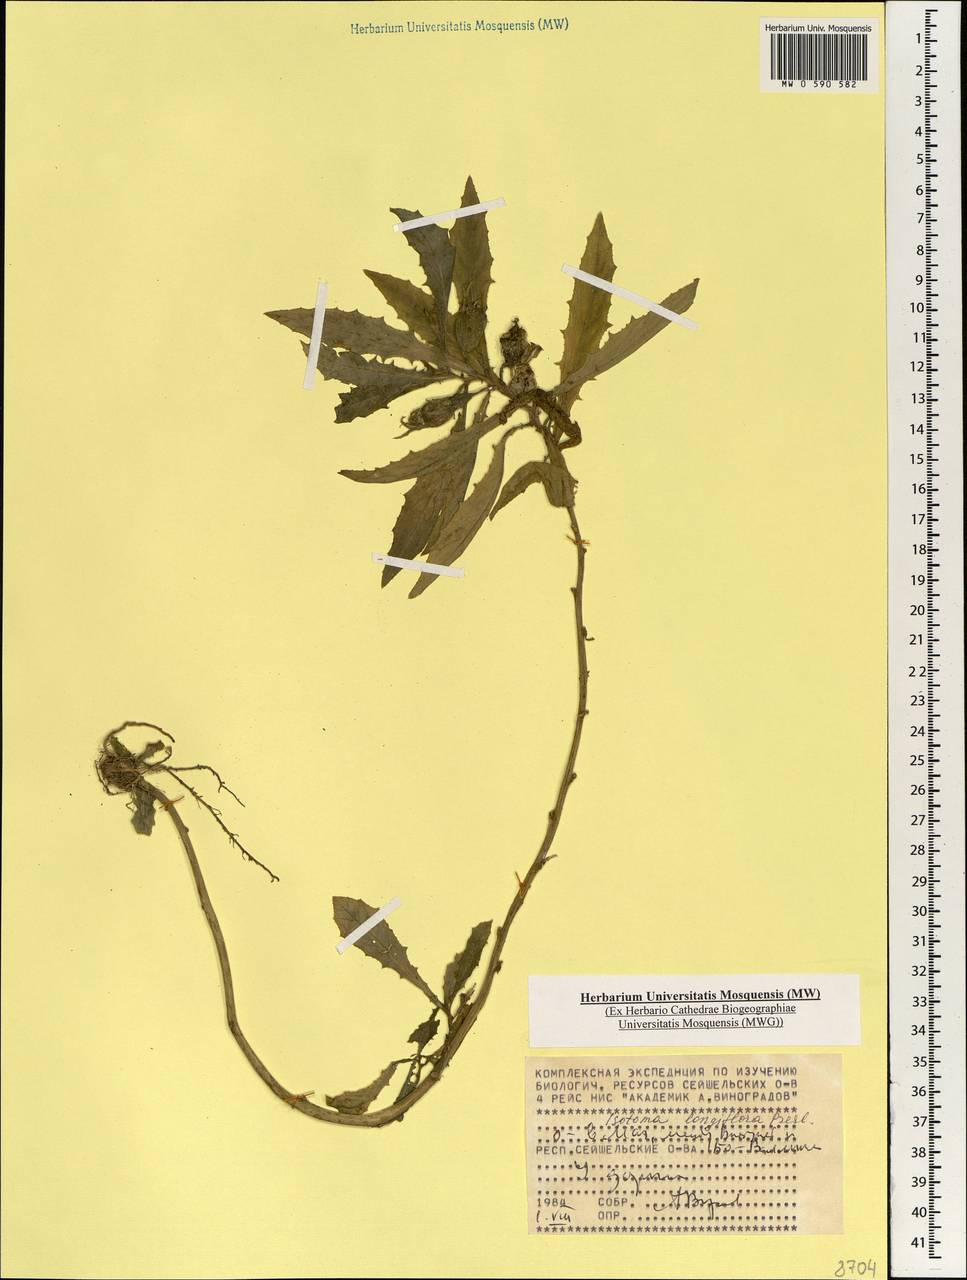 Hippobroma longiflora (L.) G.Don, Africa (AFR) (Seychelles)